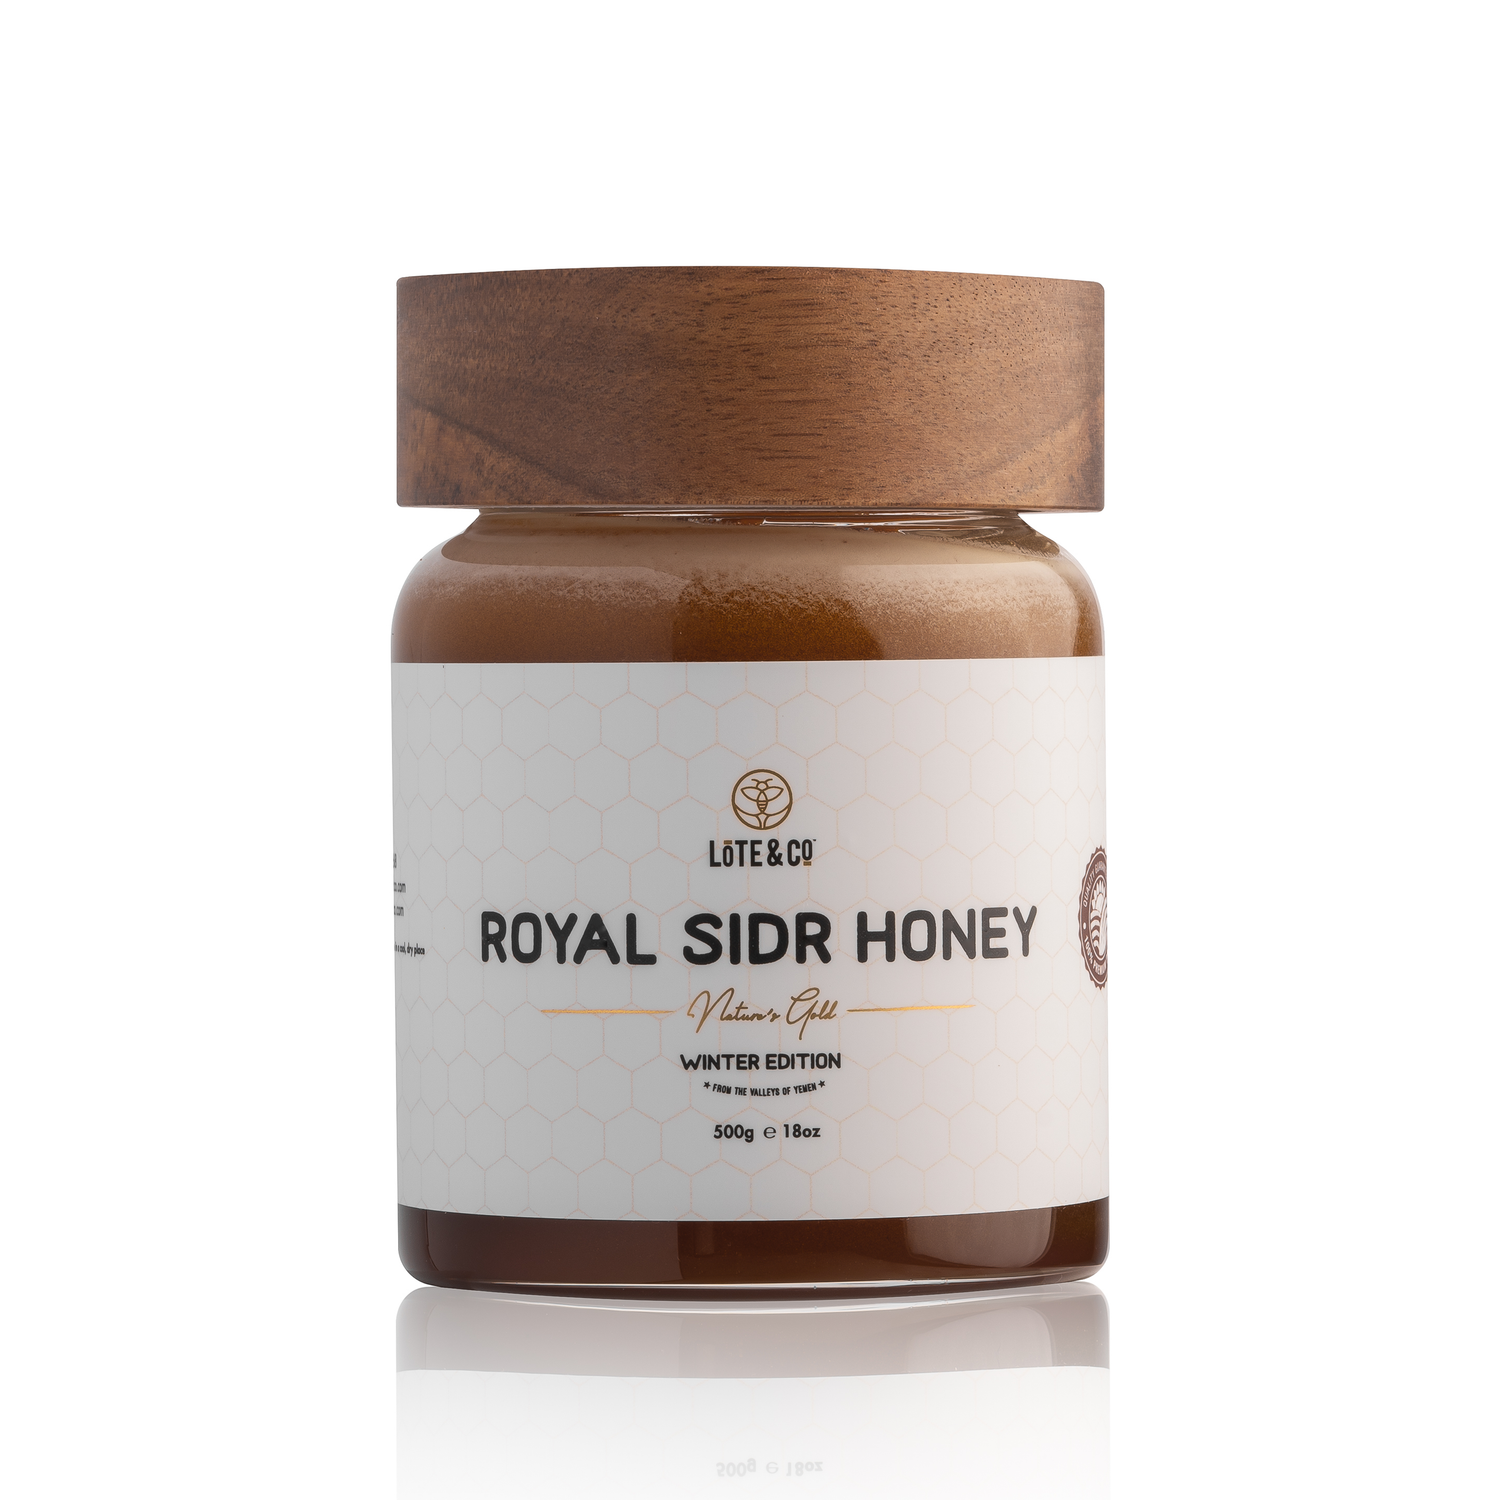 Royal Yemeni Sidr Honey Winter Edition (500g)